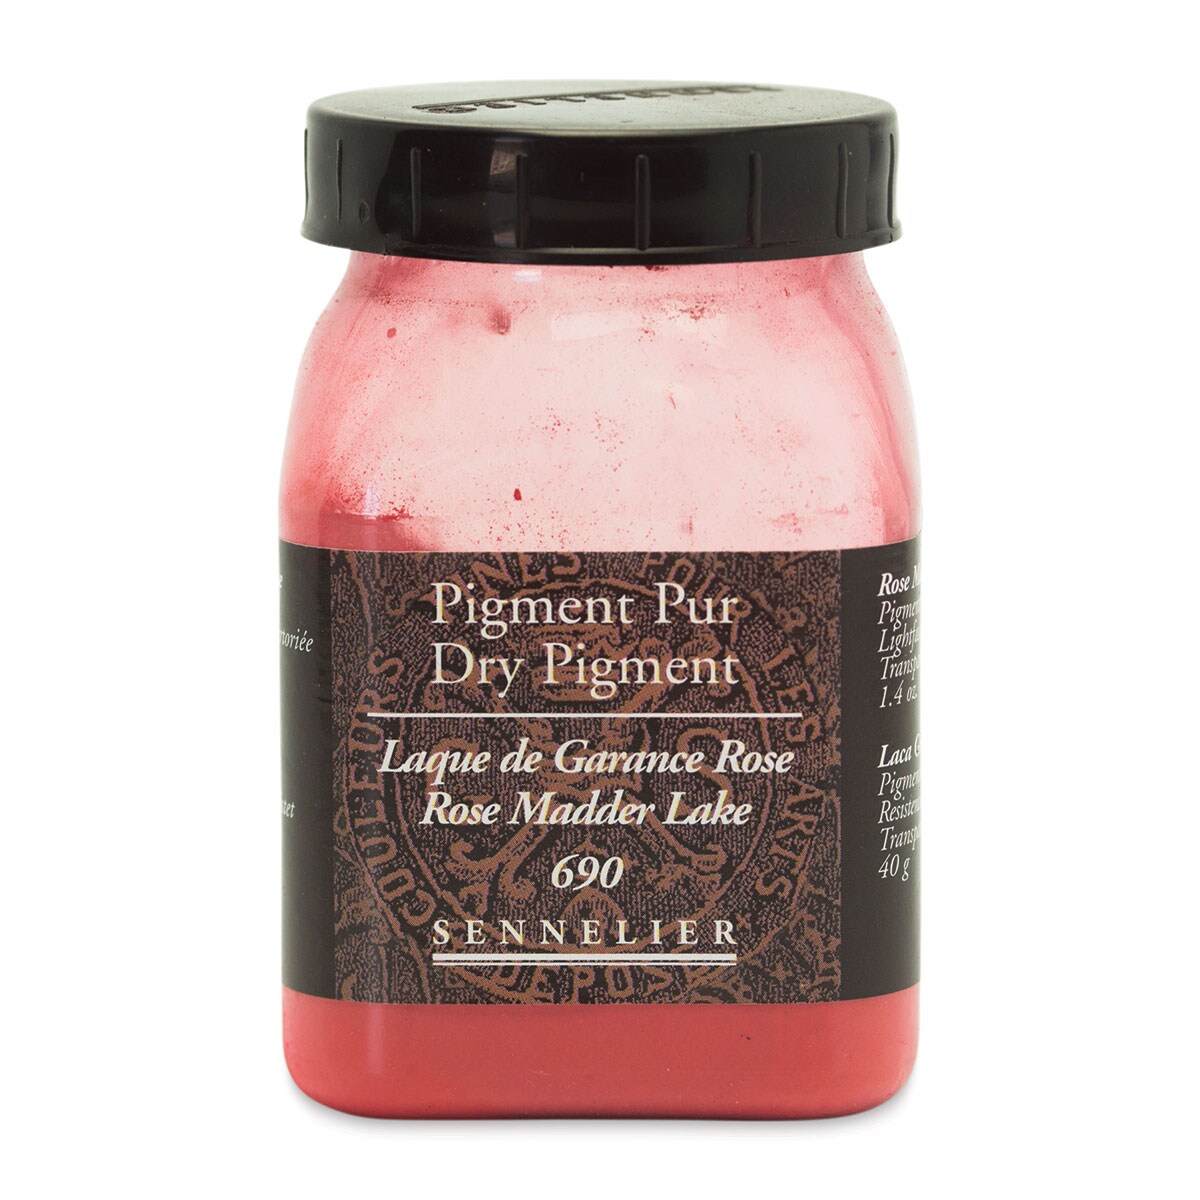 Sennelier Dry Pigment - Rose Madder Lake, 40 g jar | Michaels